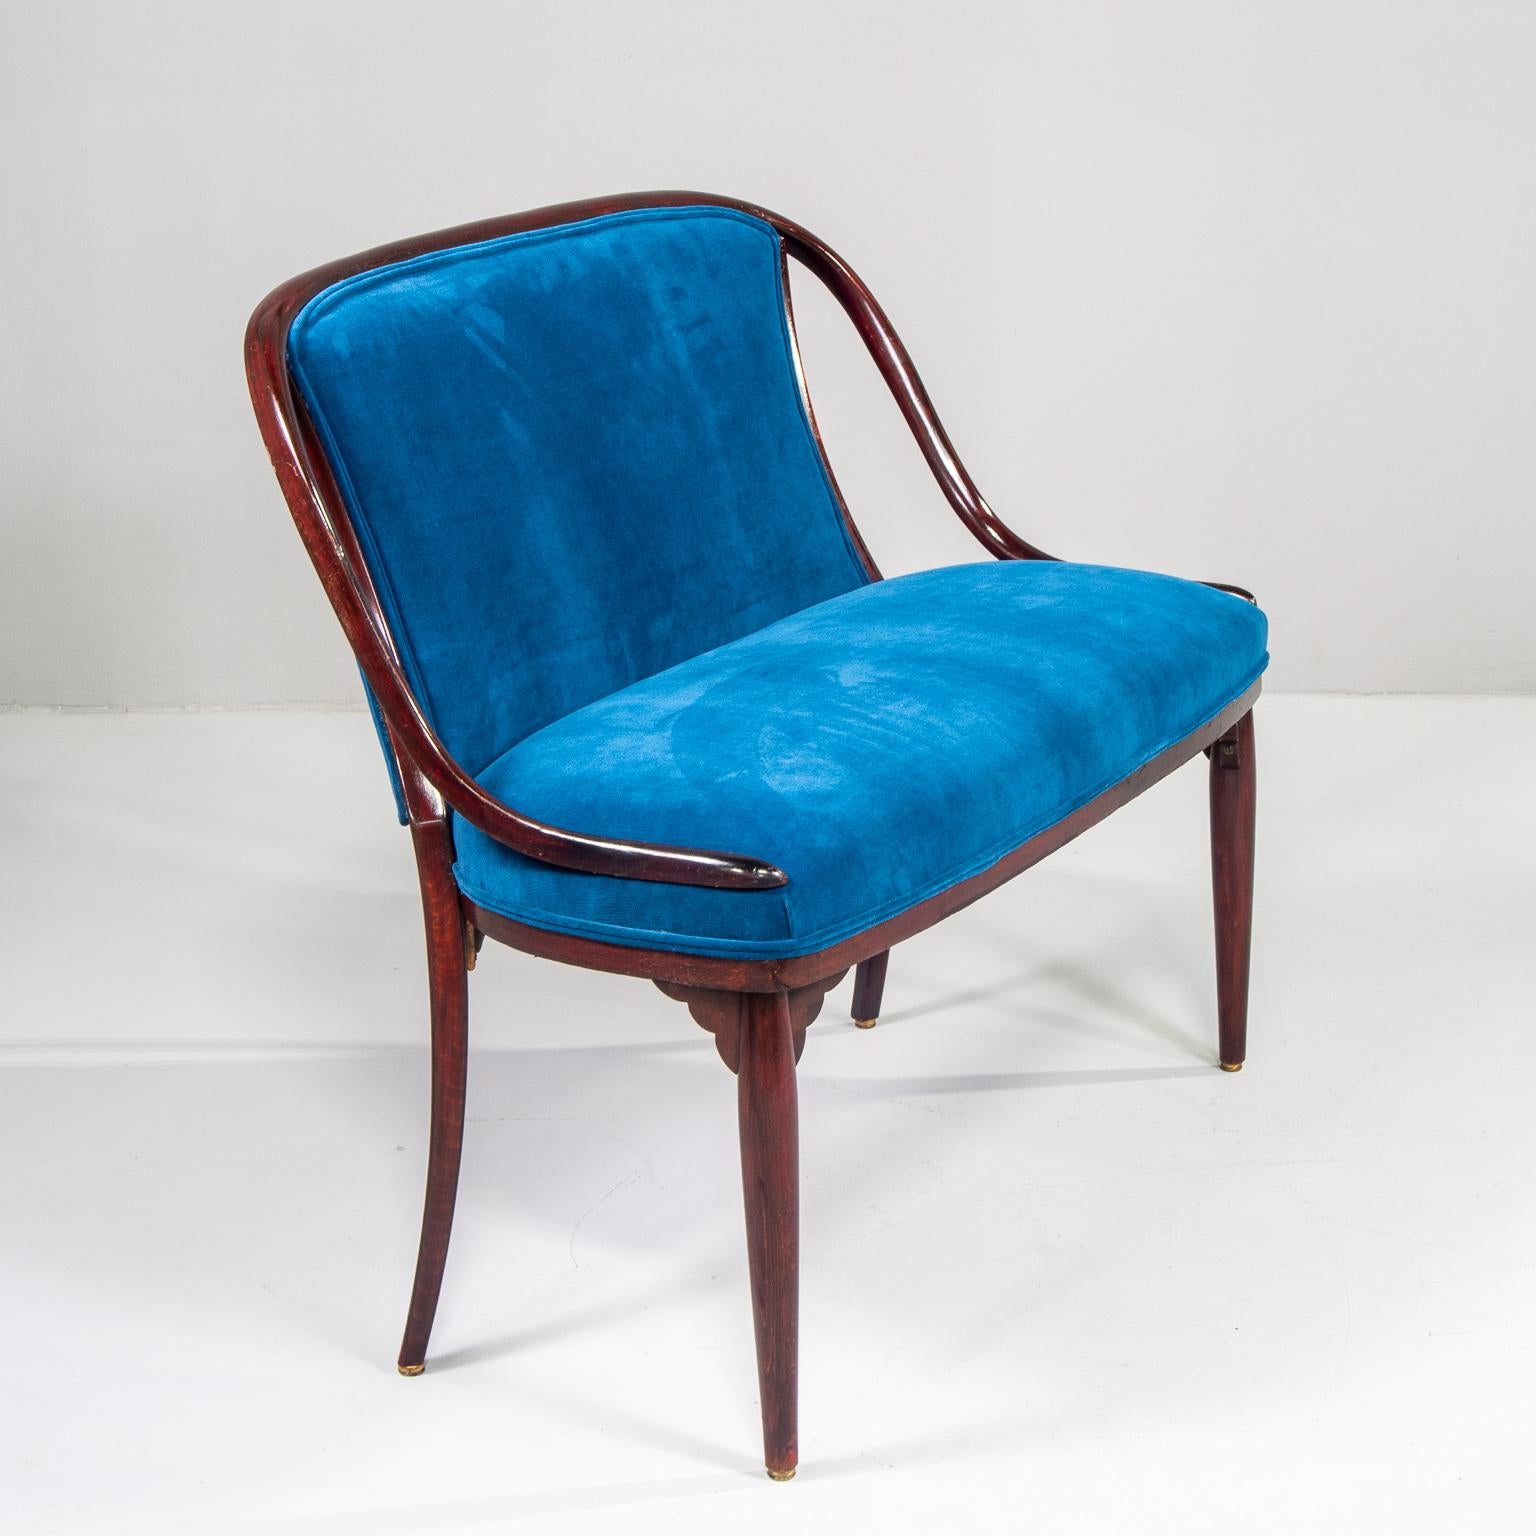 Jugendstil Thonet Settee with New Teal Blue Velvet Upholstery